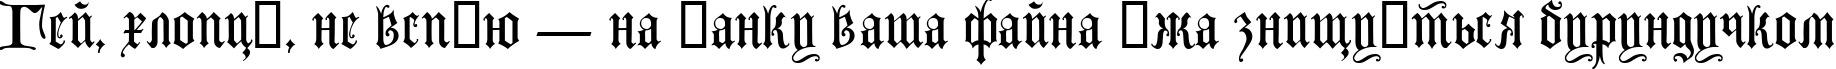 Пример написания шрифтом Lombardina Two текста на украинском